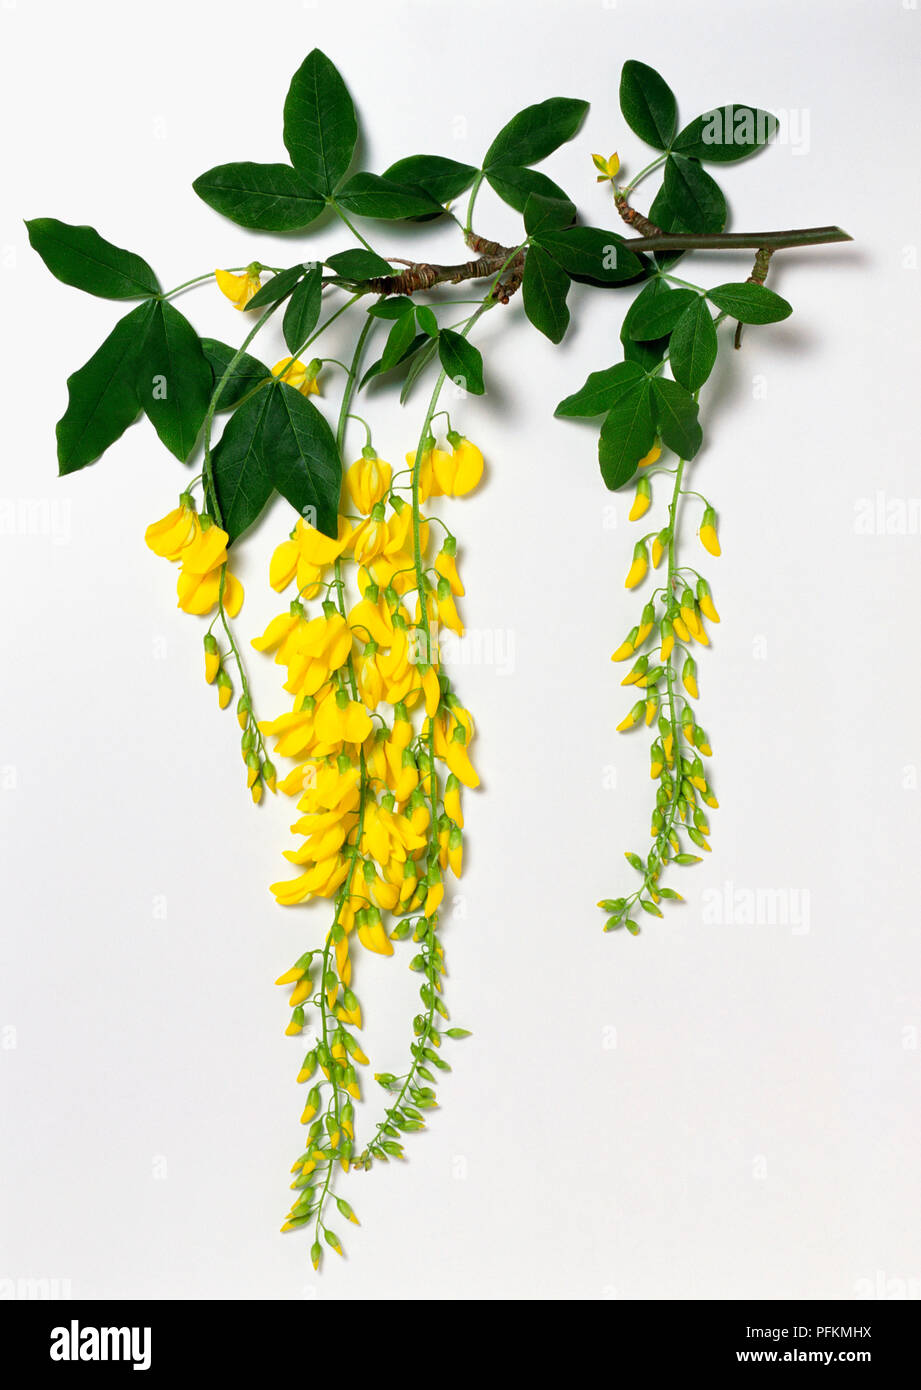 Laburnum x watereri (Voss's Laburnum) with yellow flowers on hanging stems and green leaves Stock Photo